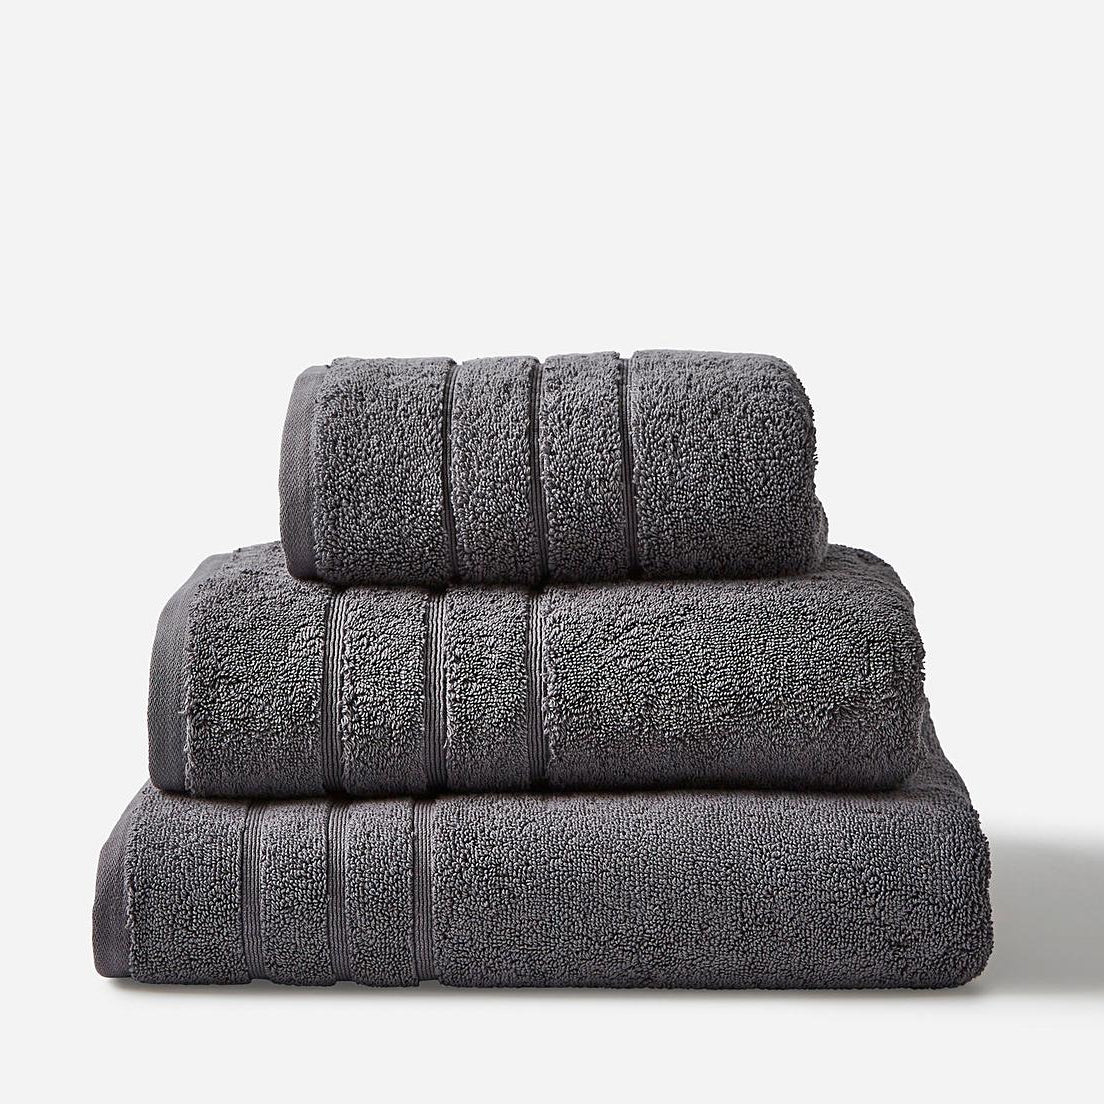 Hotel Quality Towels - Charcoal Grey Bathroom Towels